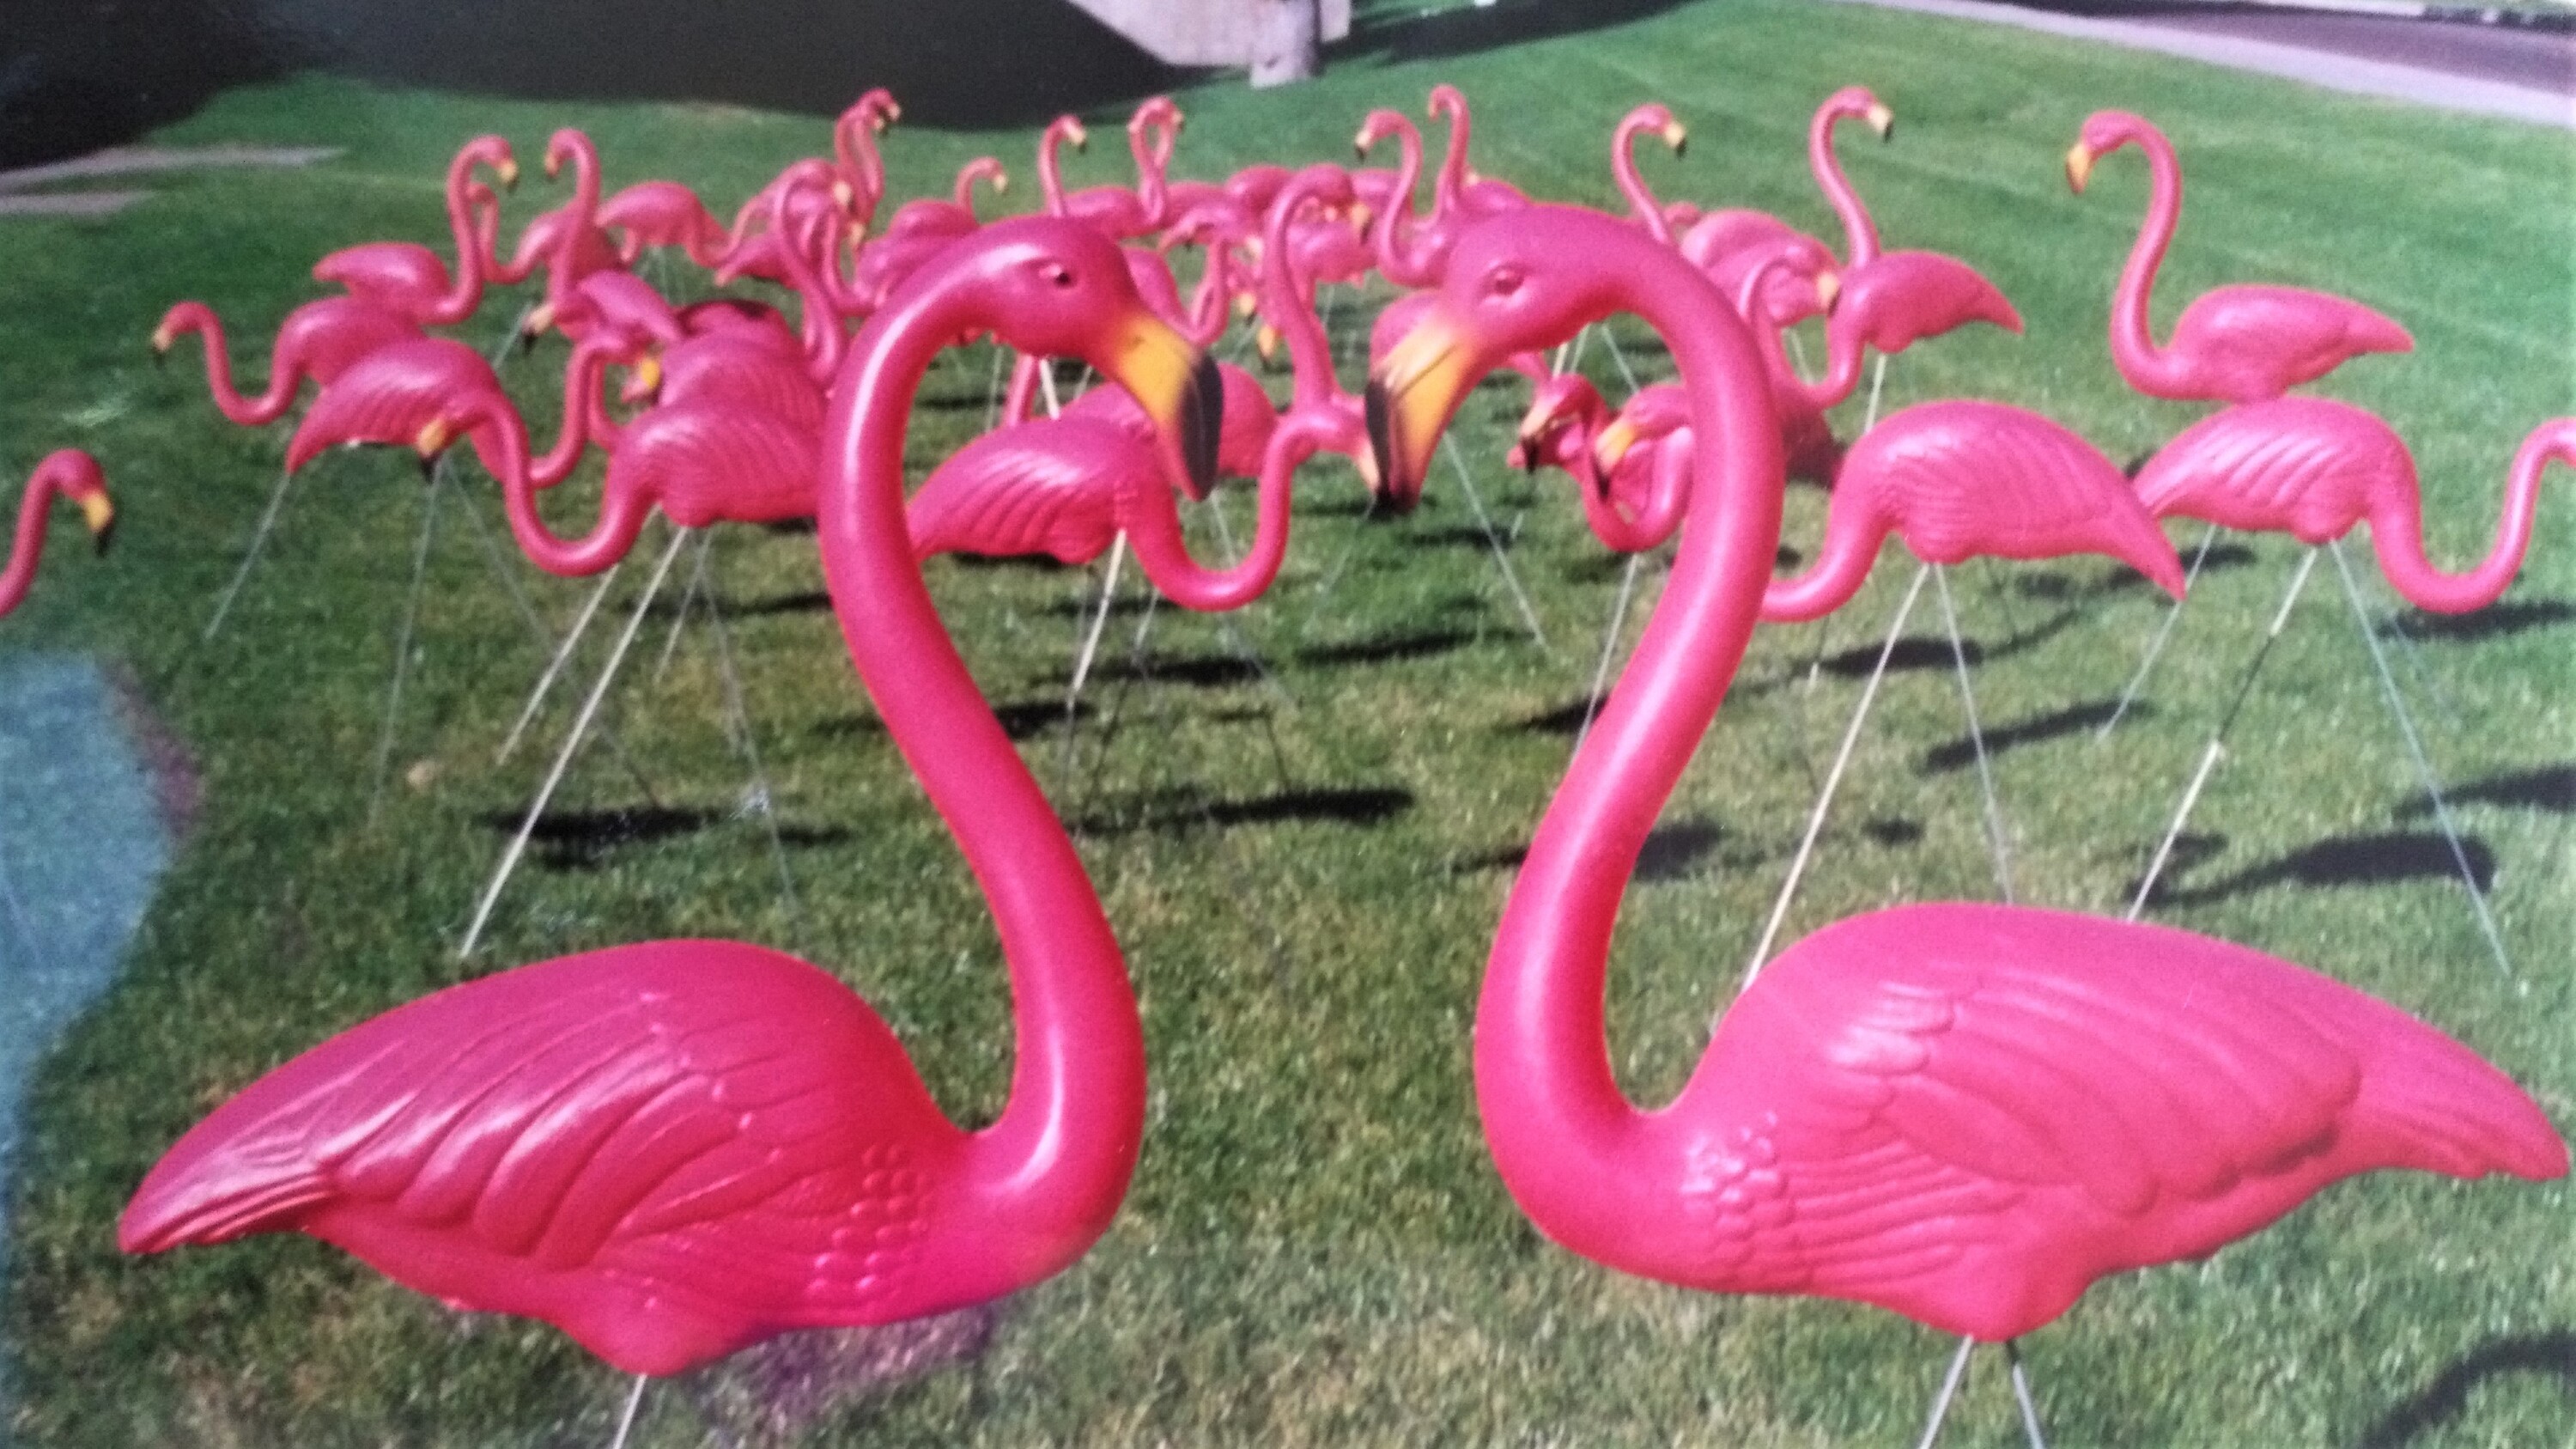 The perfect flock of 50 rental birthday flamingos